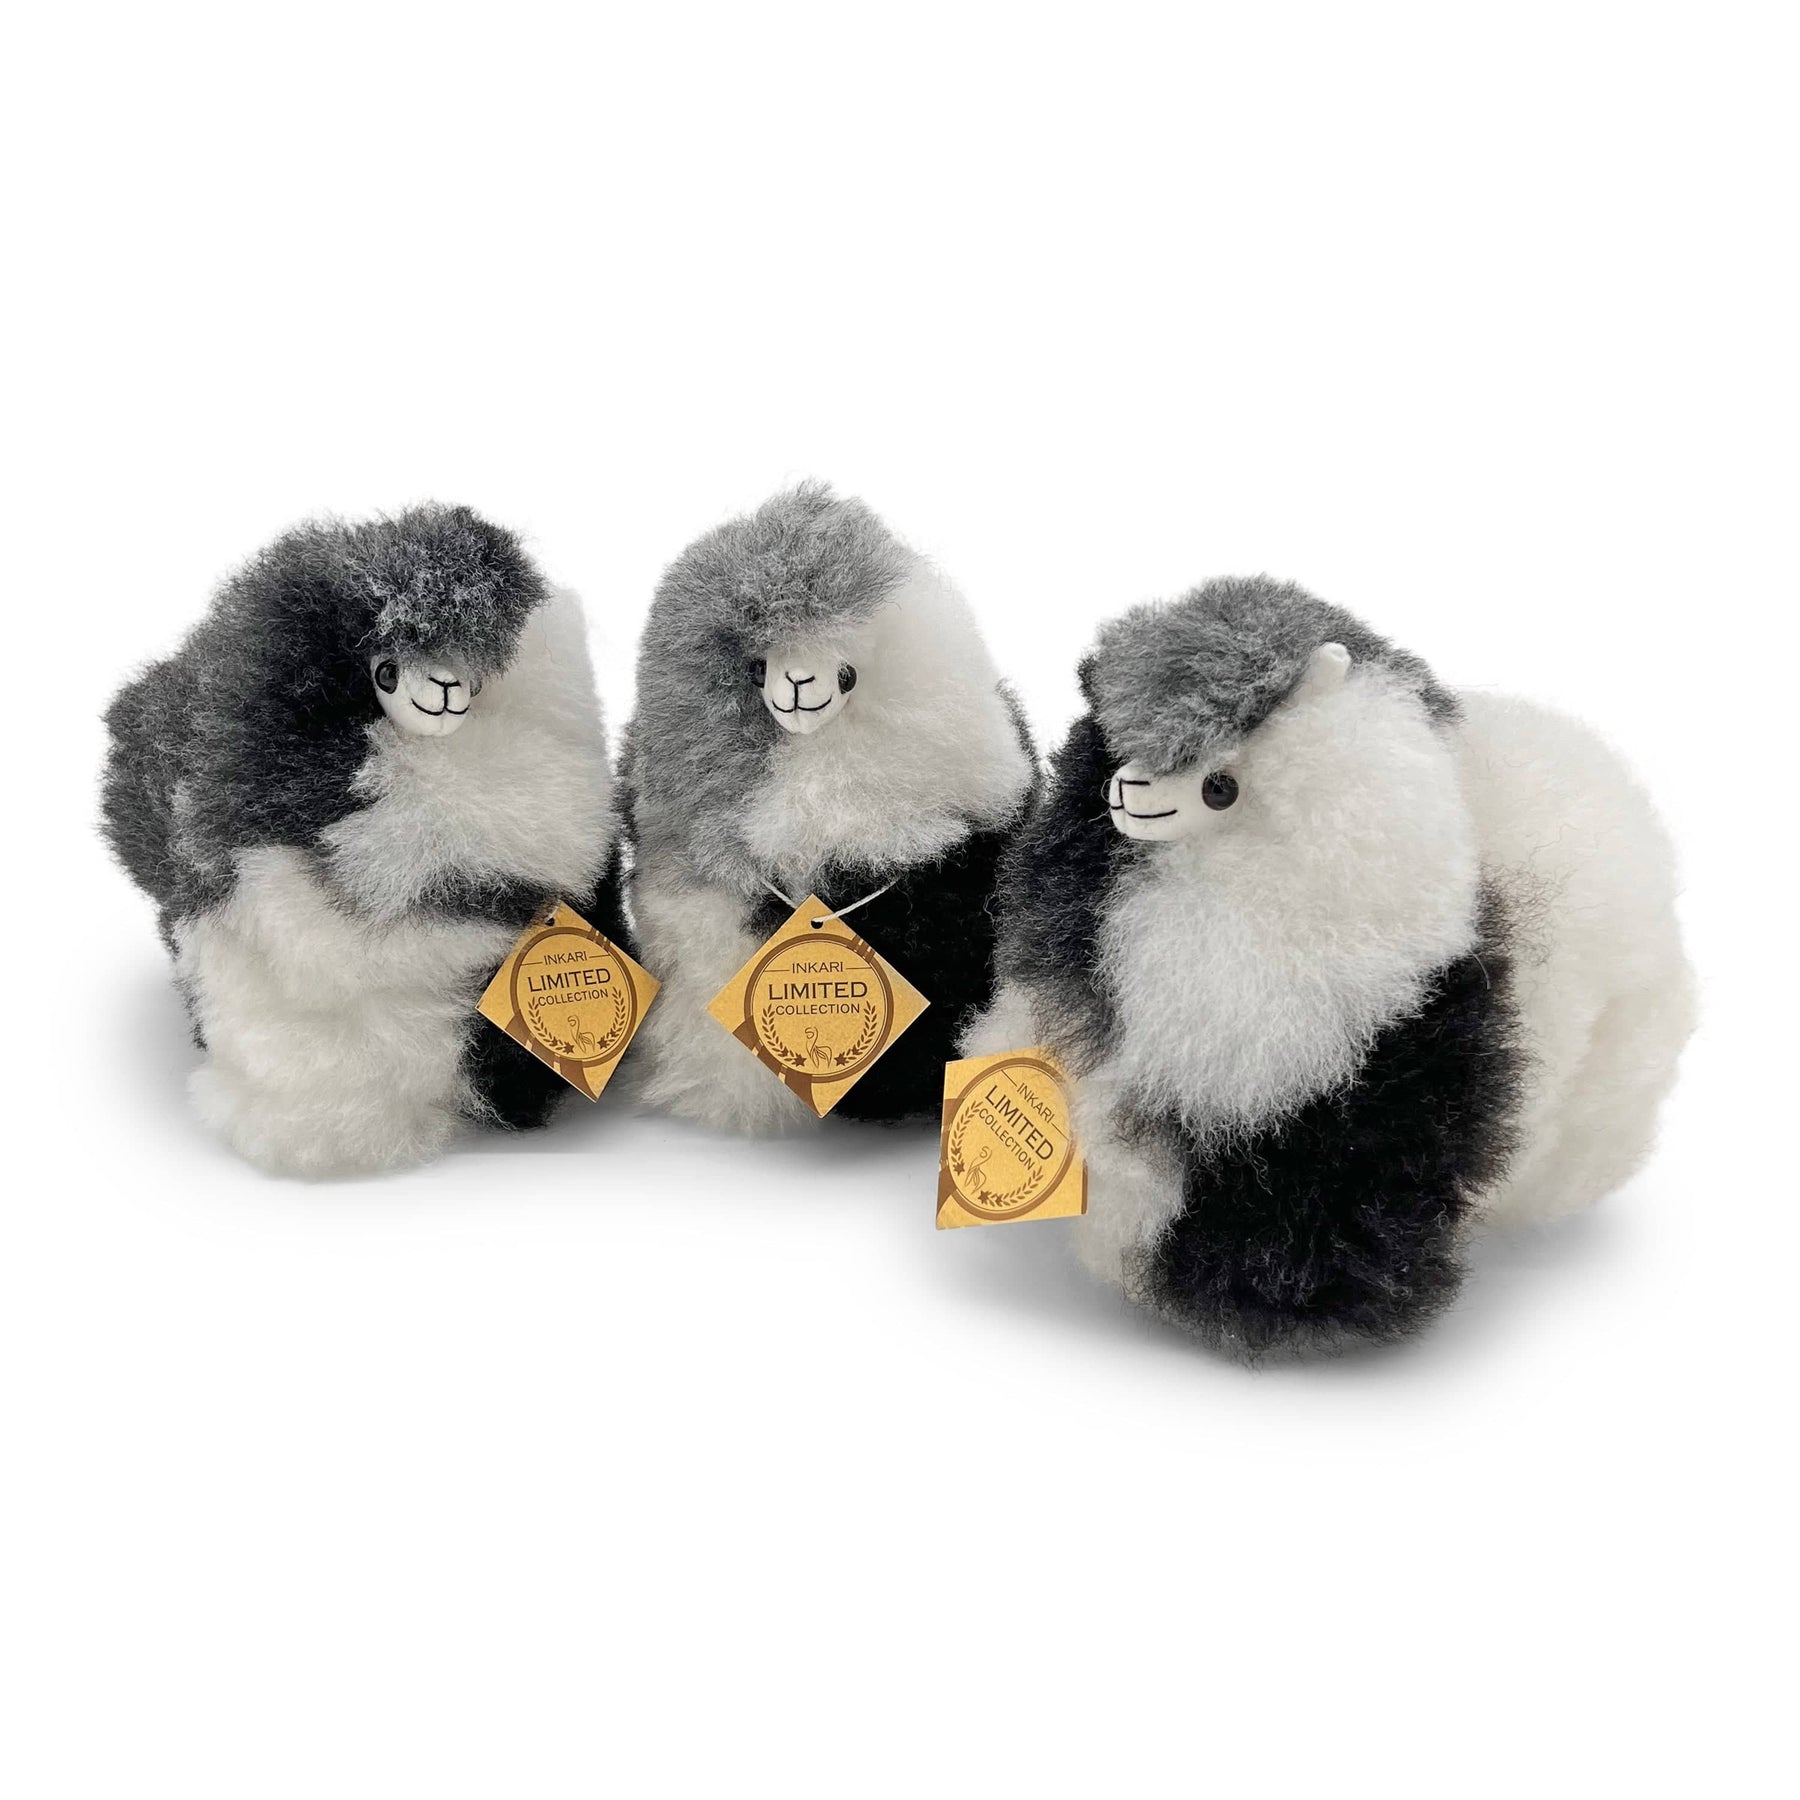 Silver Orca - Mini juguete de alpaca (15 cm) - Edición limitada